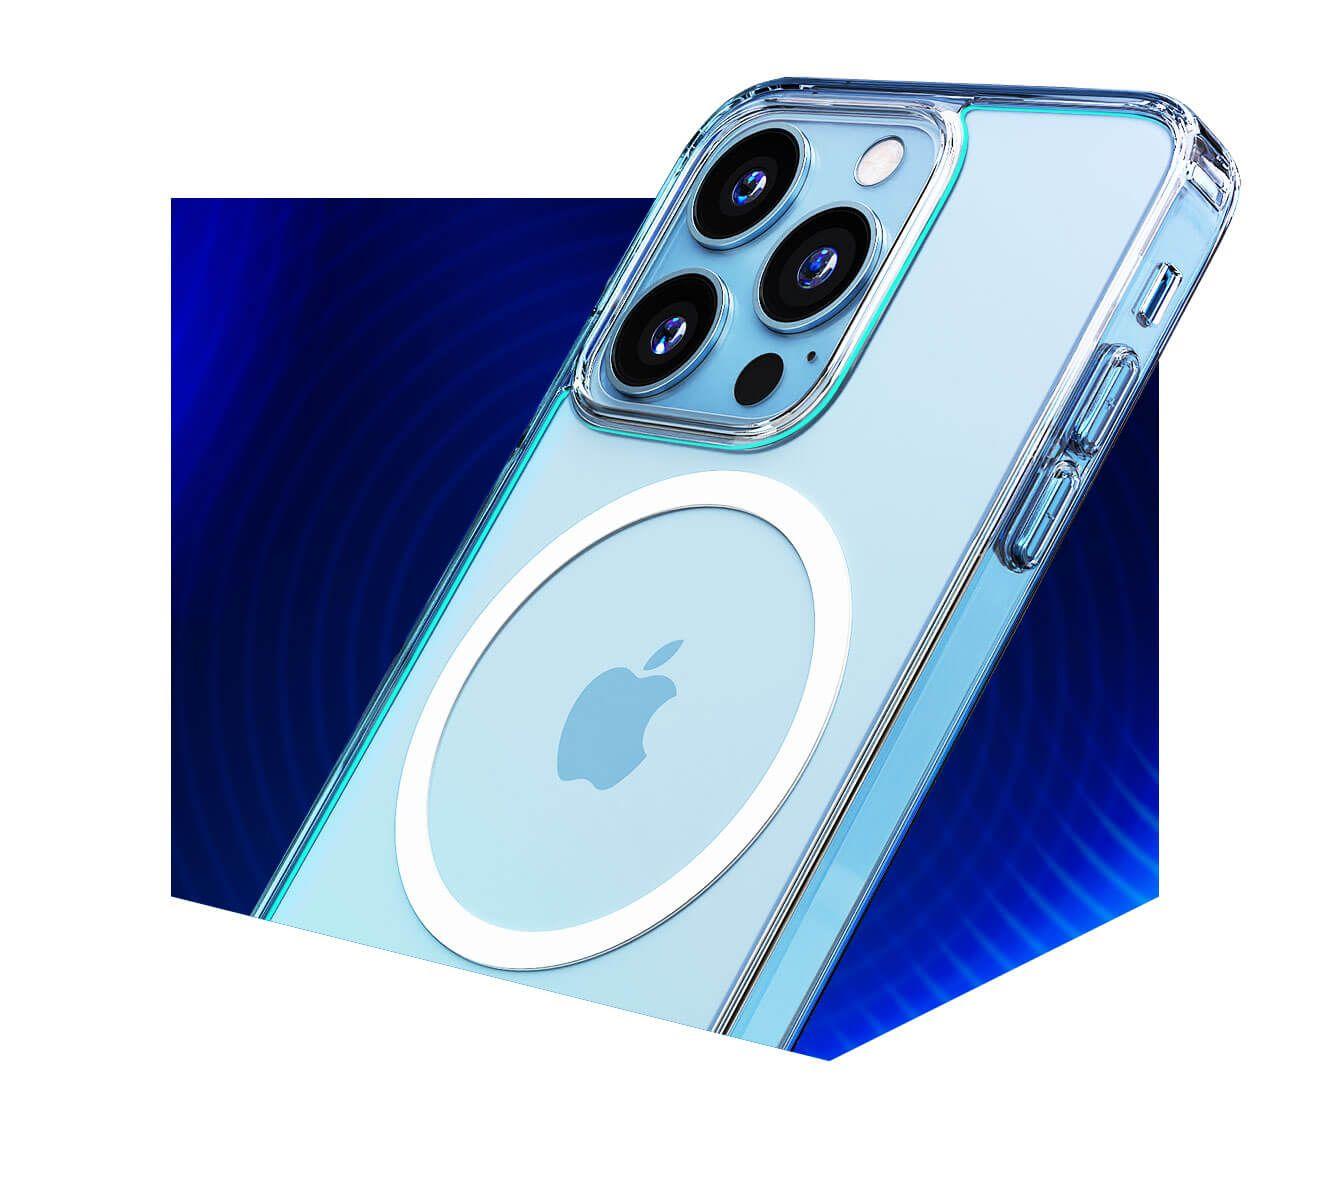 3mk MagSafe Mag Case - iPhone 13 Pro